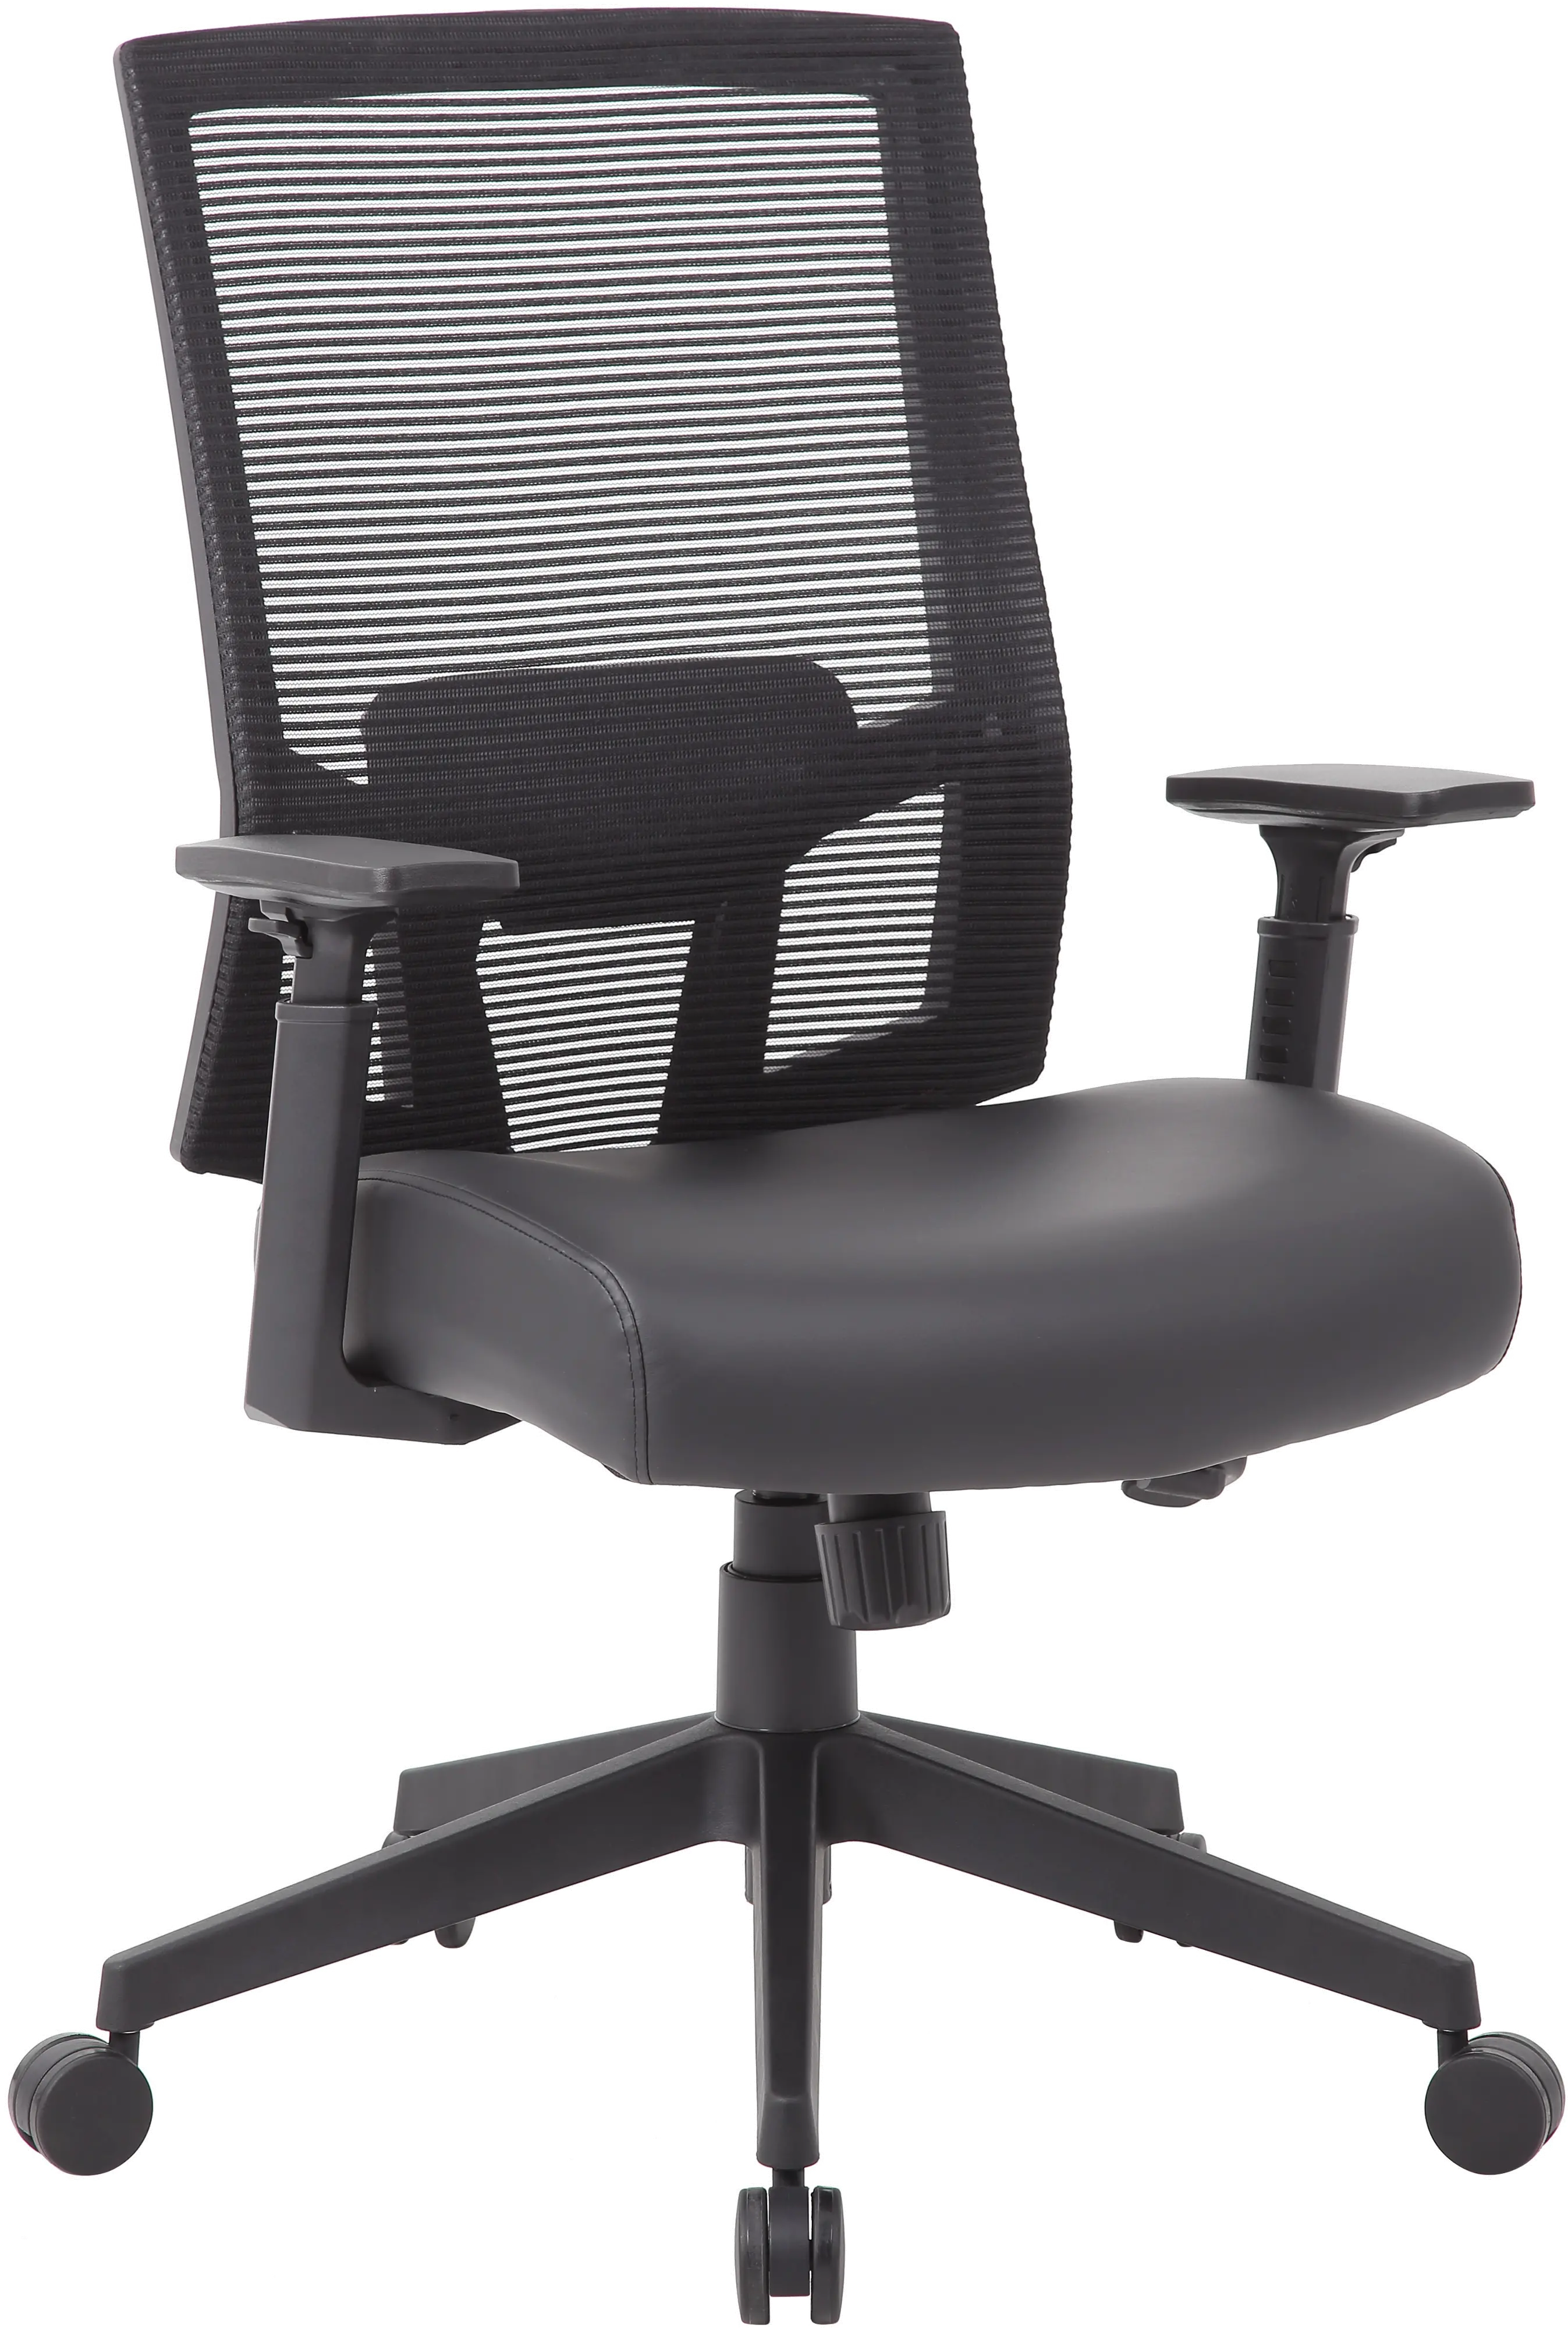 Photos - Chair BOSS Presidential Seating  Black Mesh Back Office  B6044AM-BK 